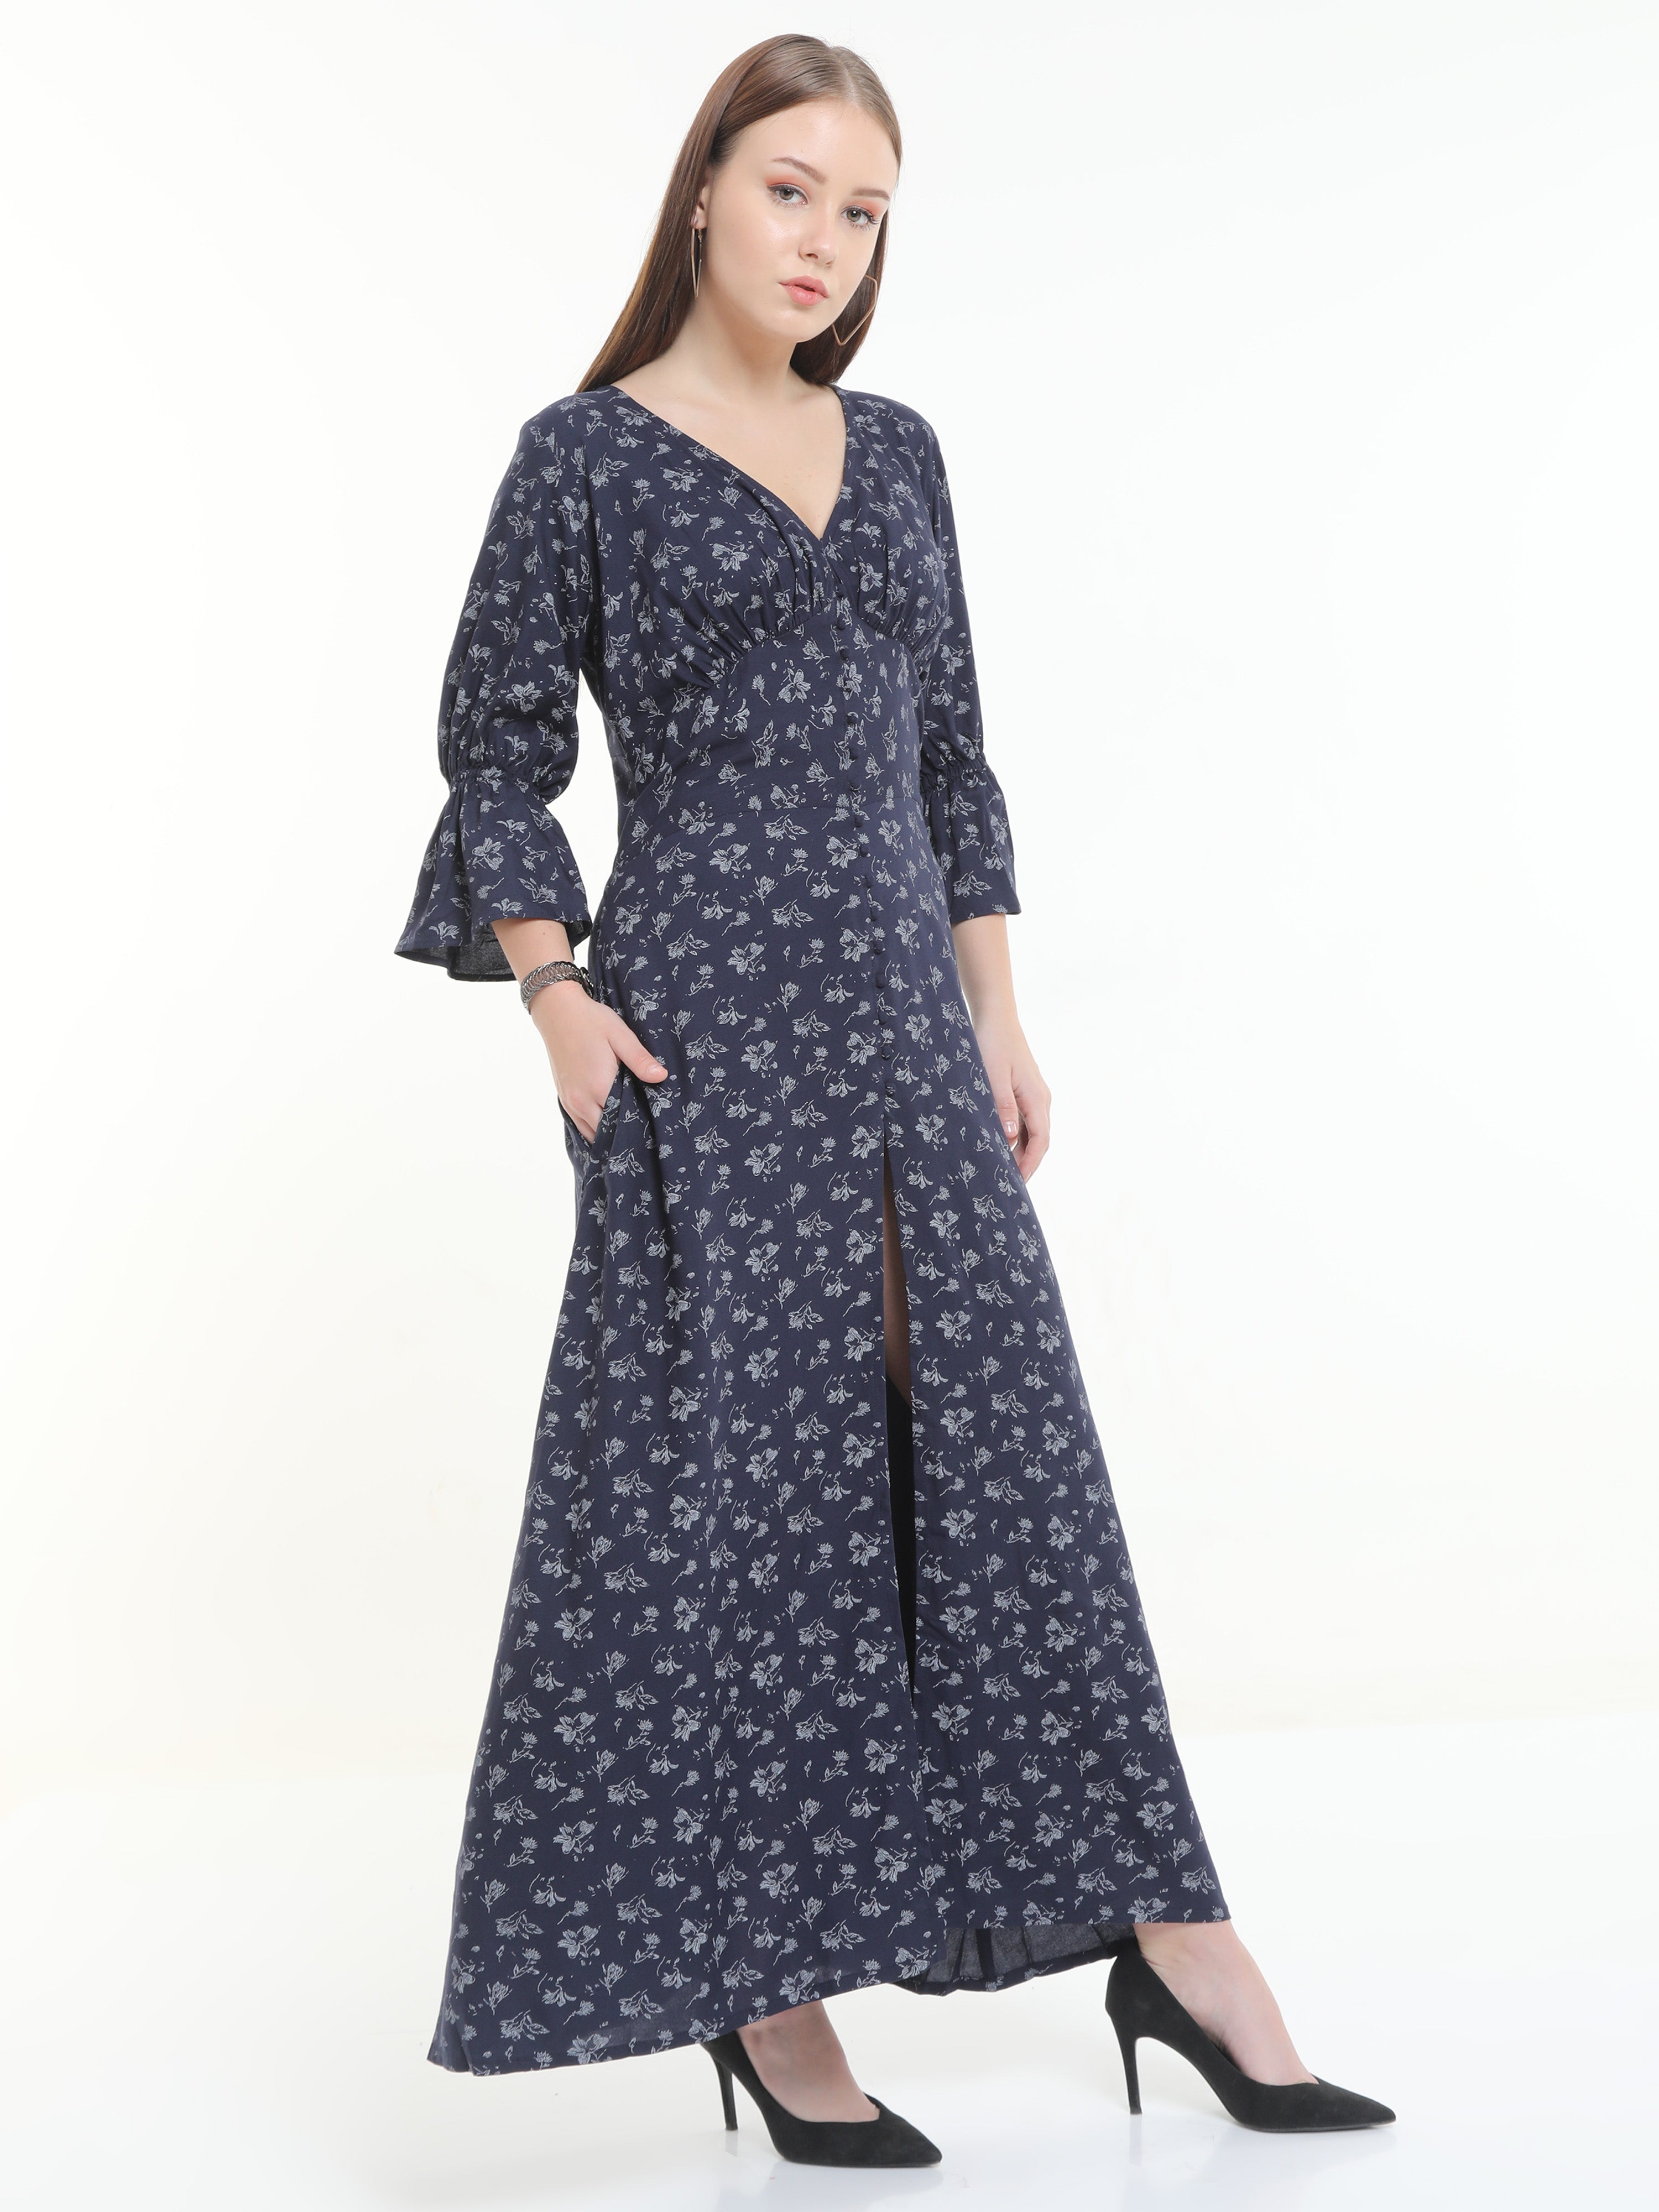 Fashionista - Allover Print Centre Slit Bell Sleeve Elegant Party Wear Dress